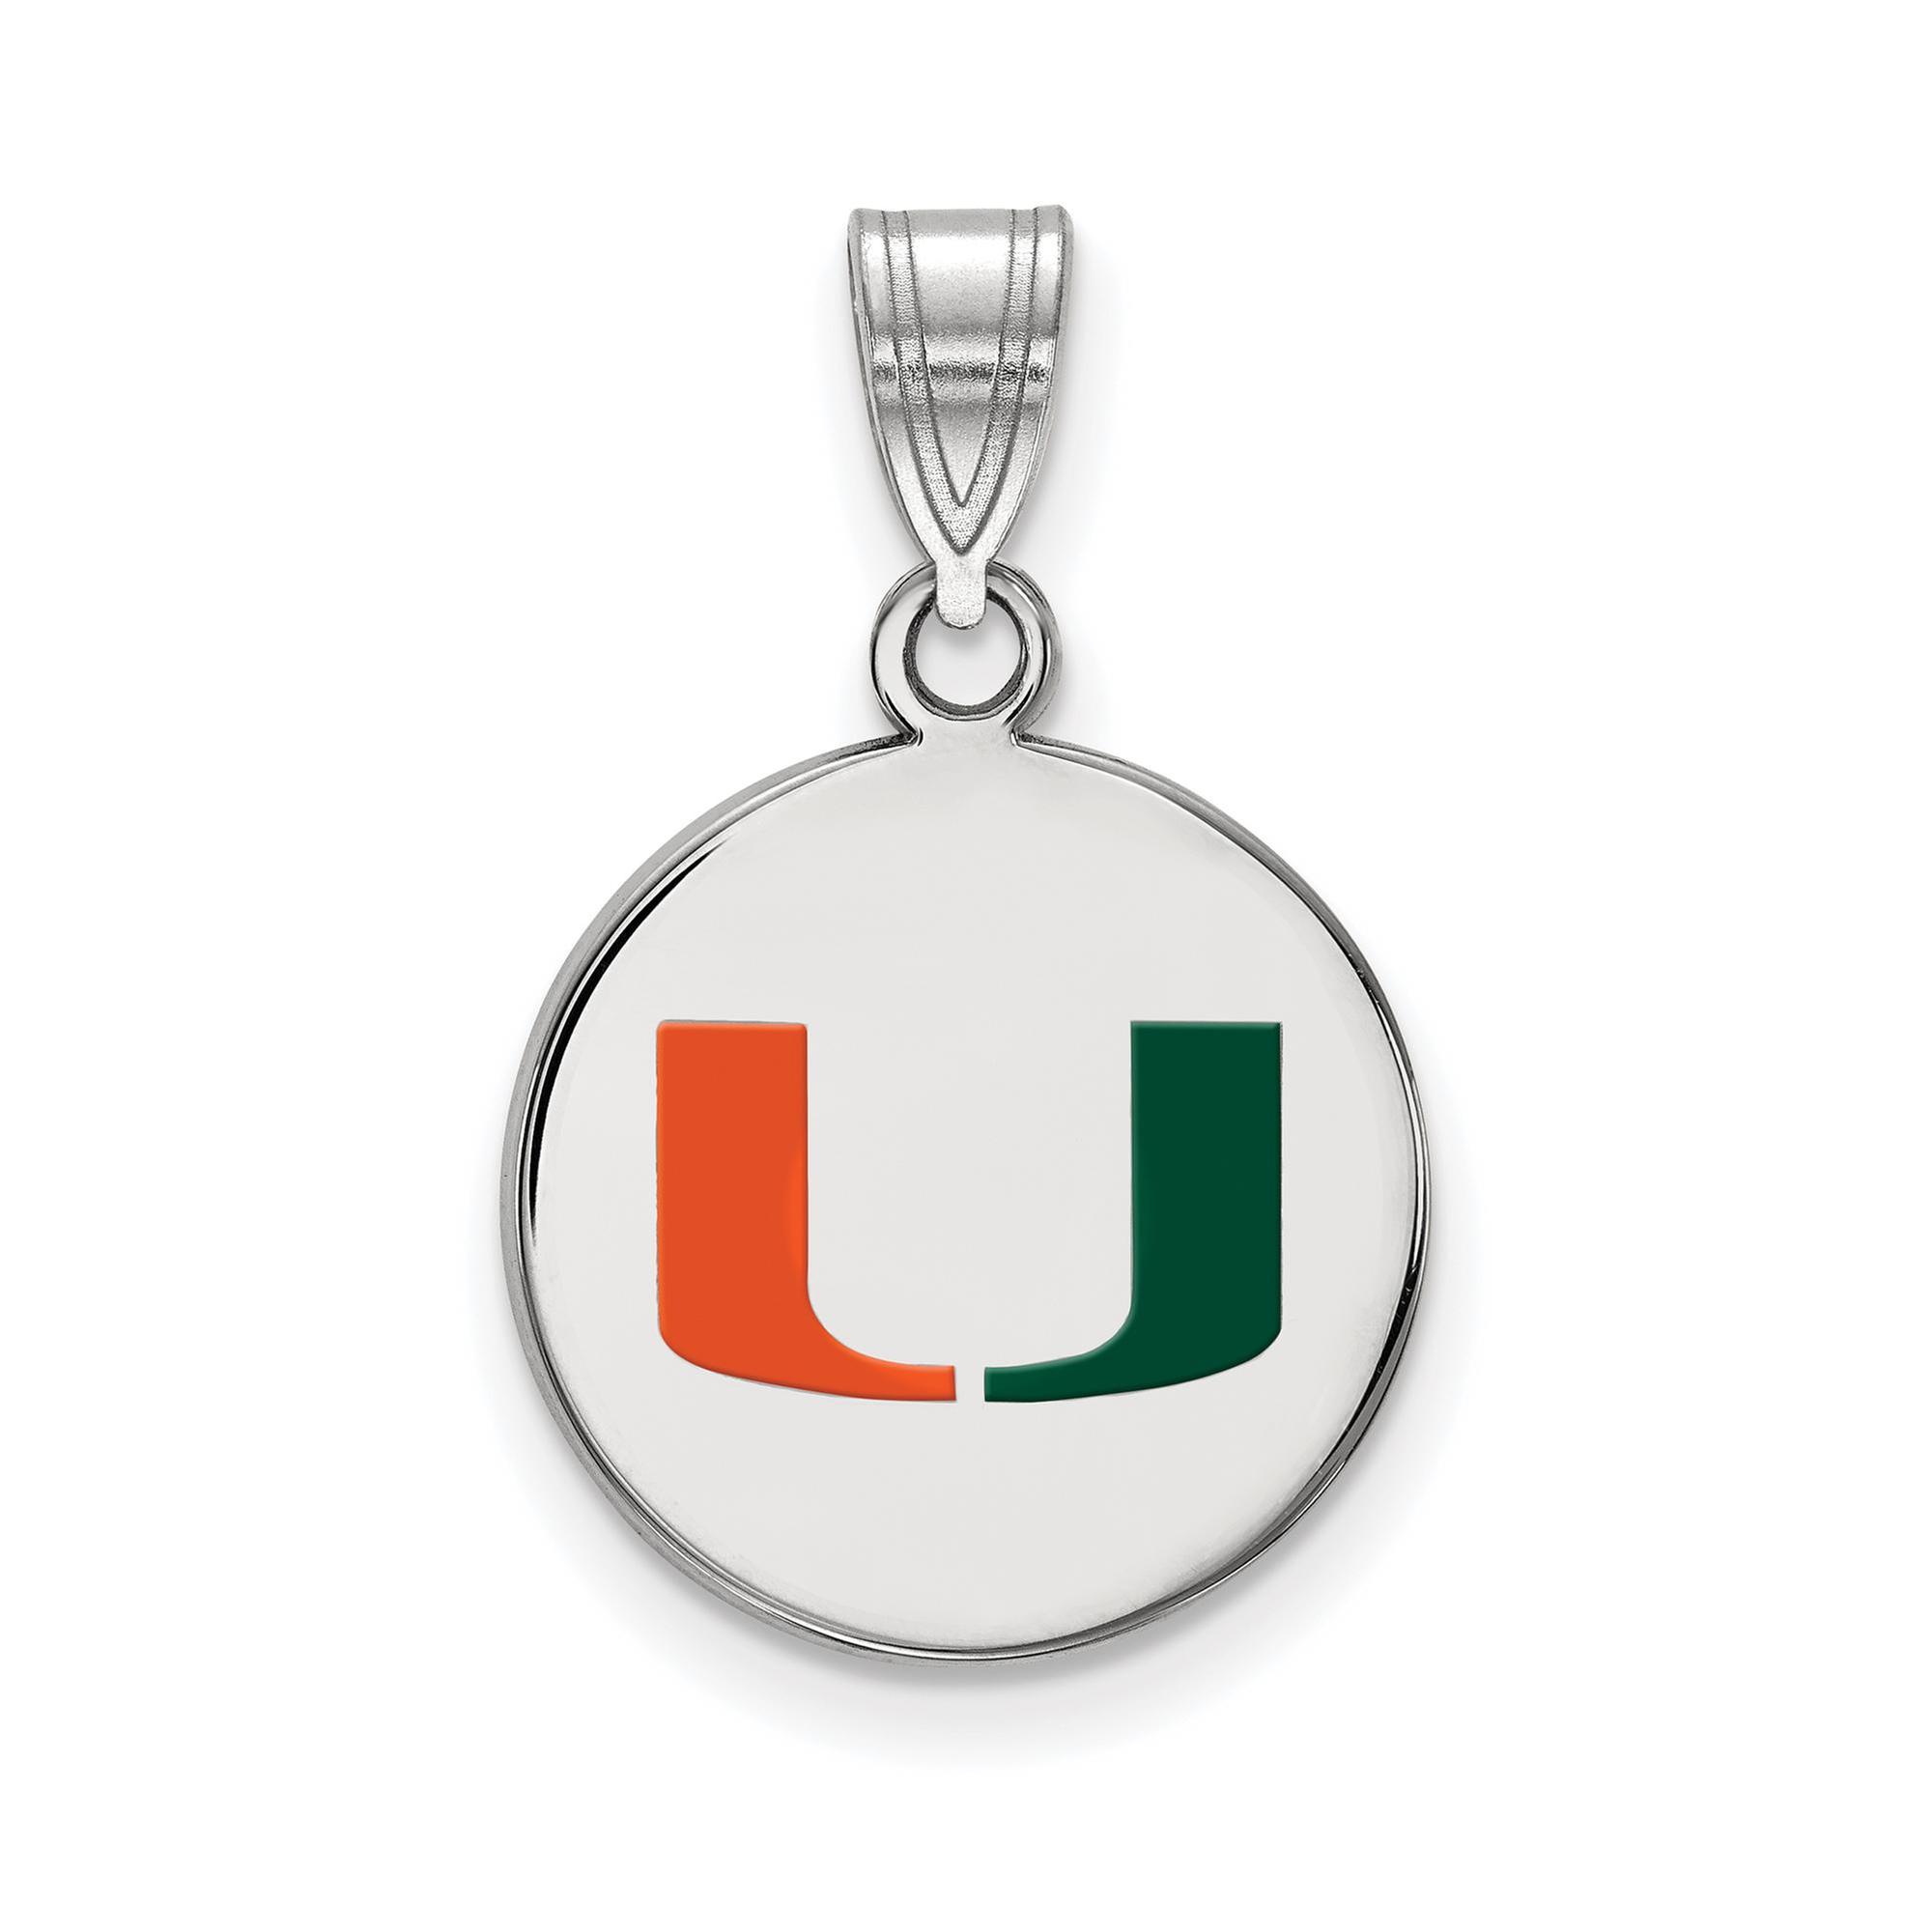 University of Miami Hurricanes School Crest Pendant in Sterling Silver 